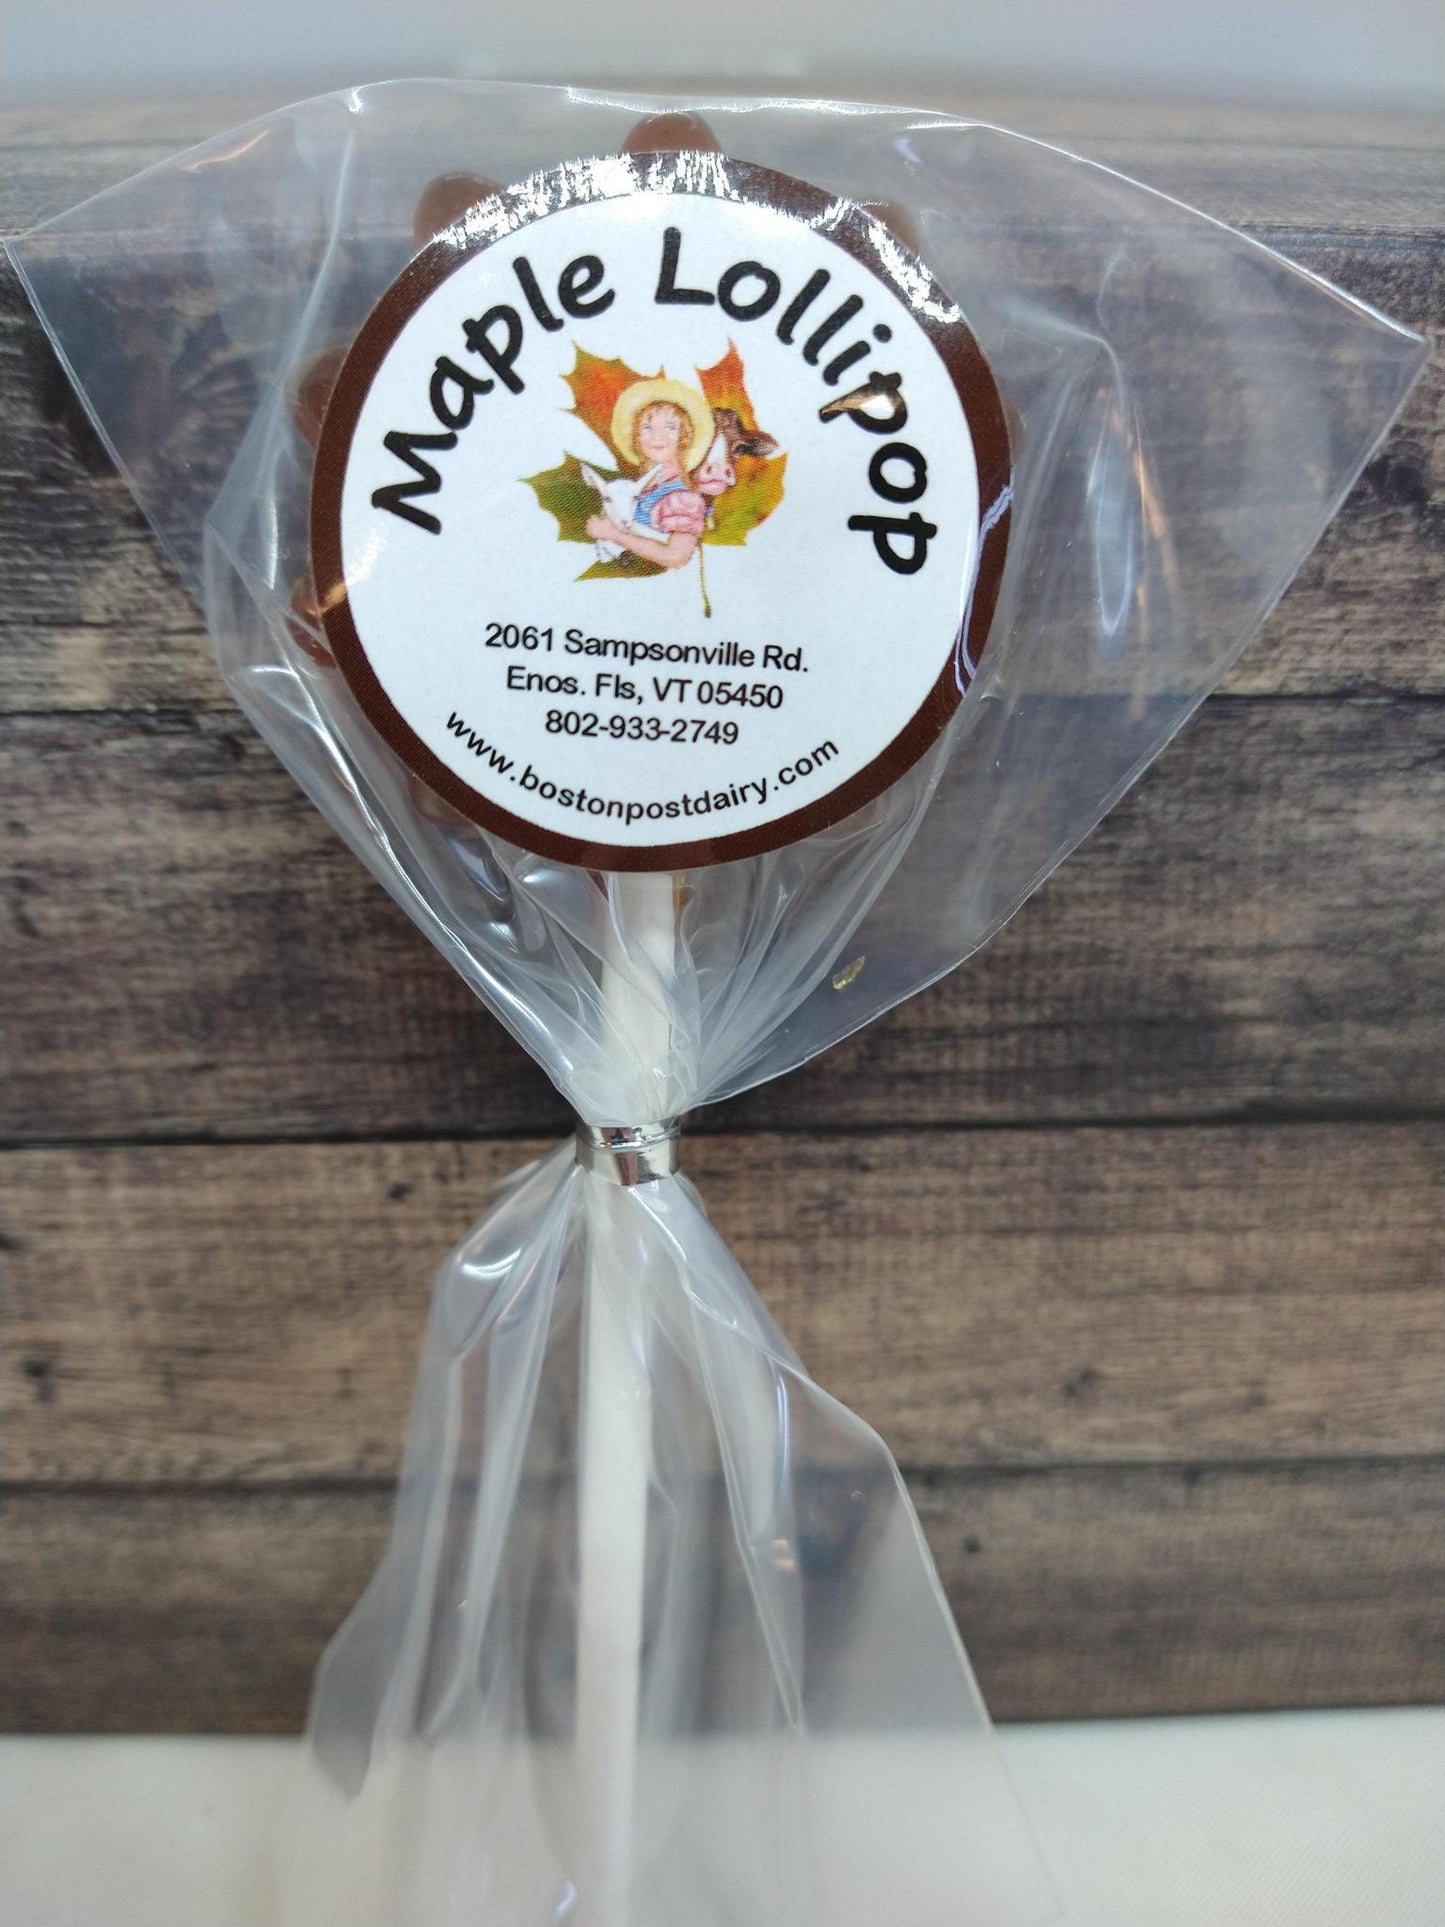 Maple Lolidrops/pops